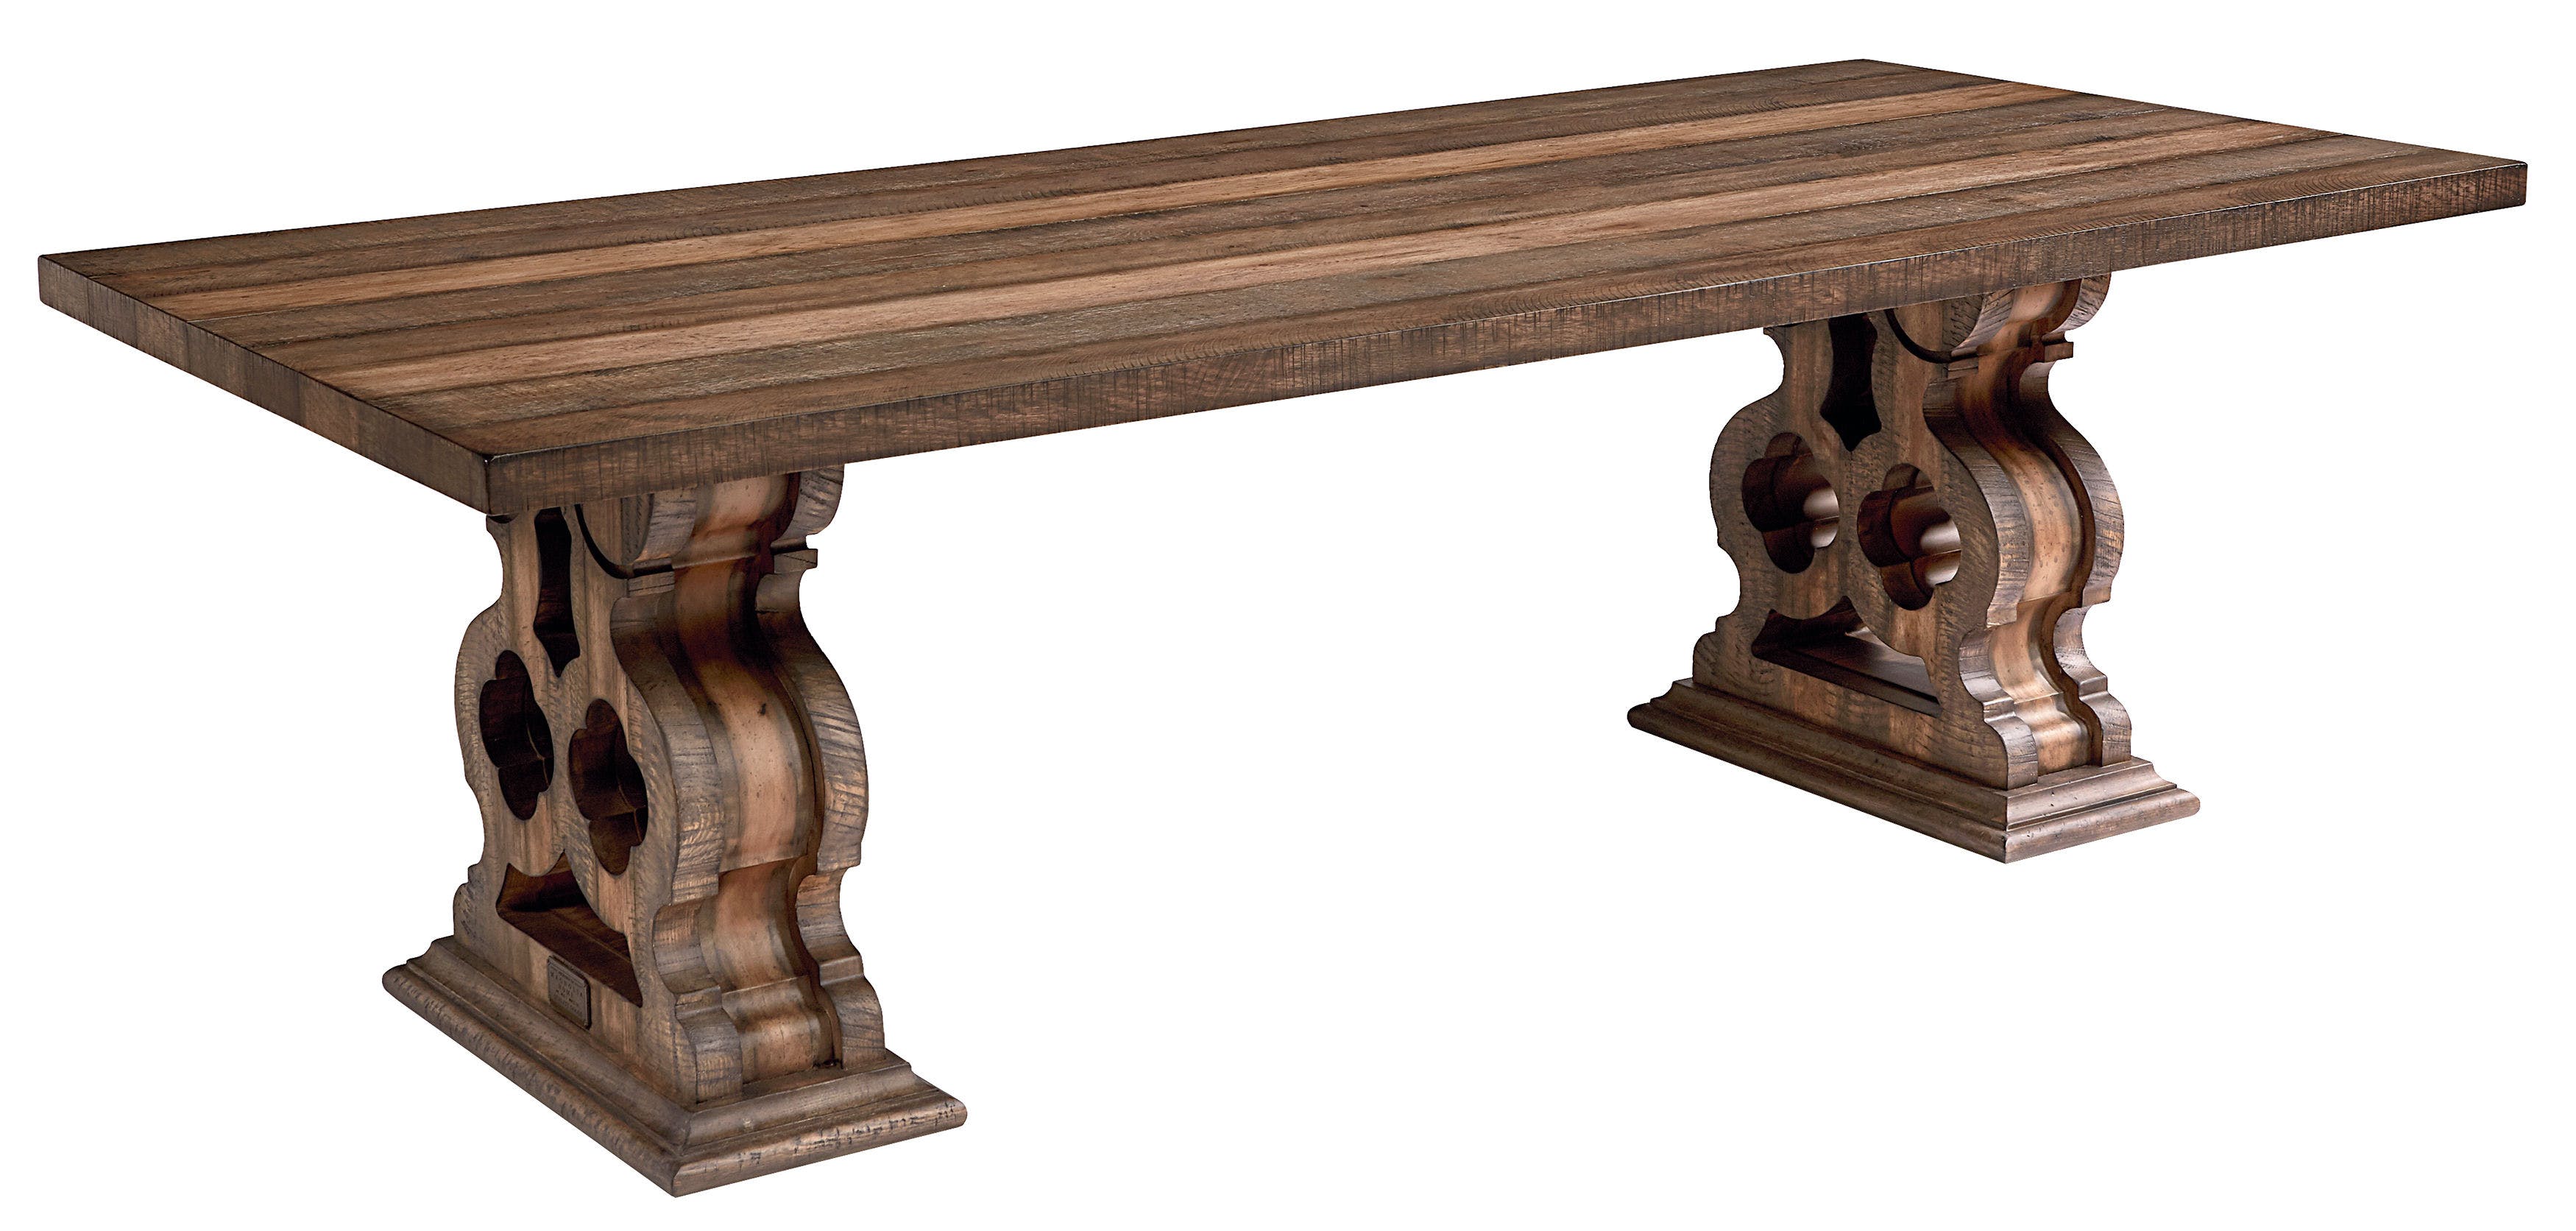 The Farmhouse Oak Double Pedestal Dining Room Table